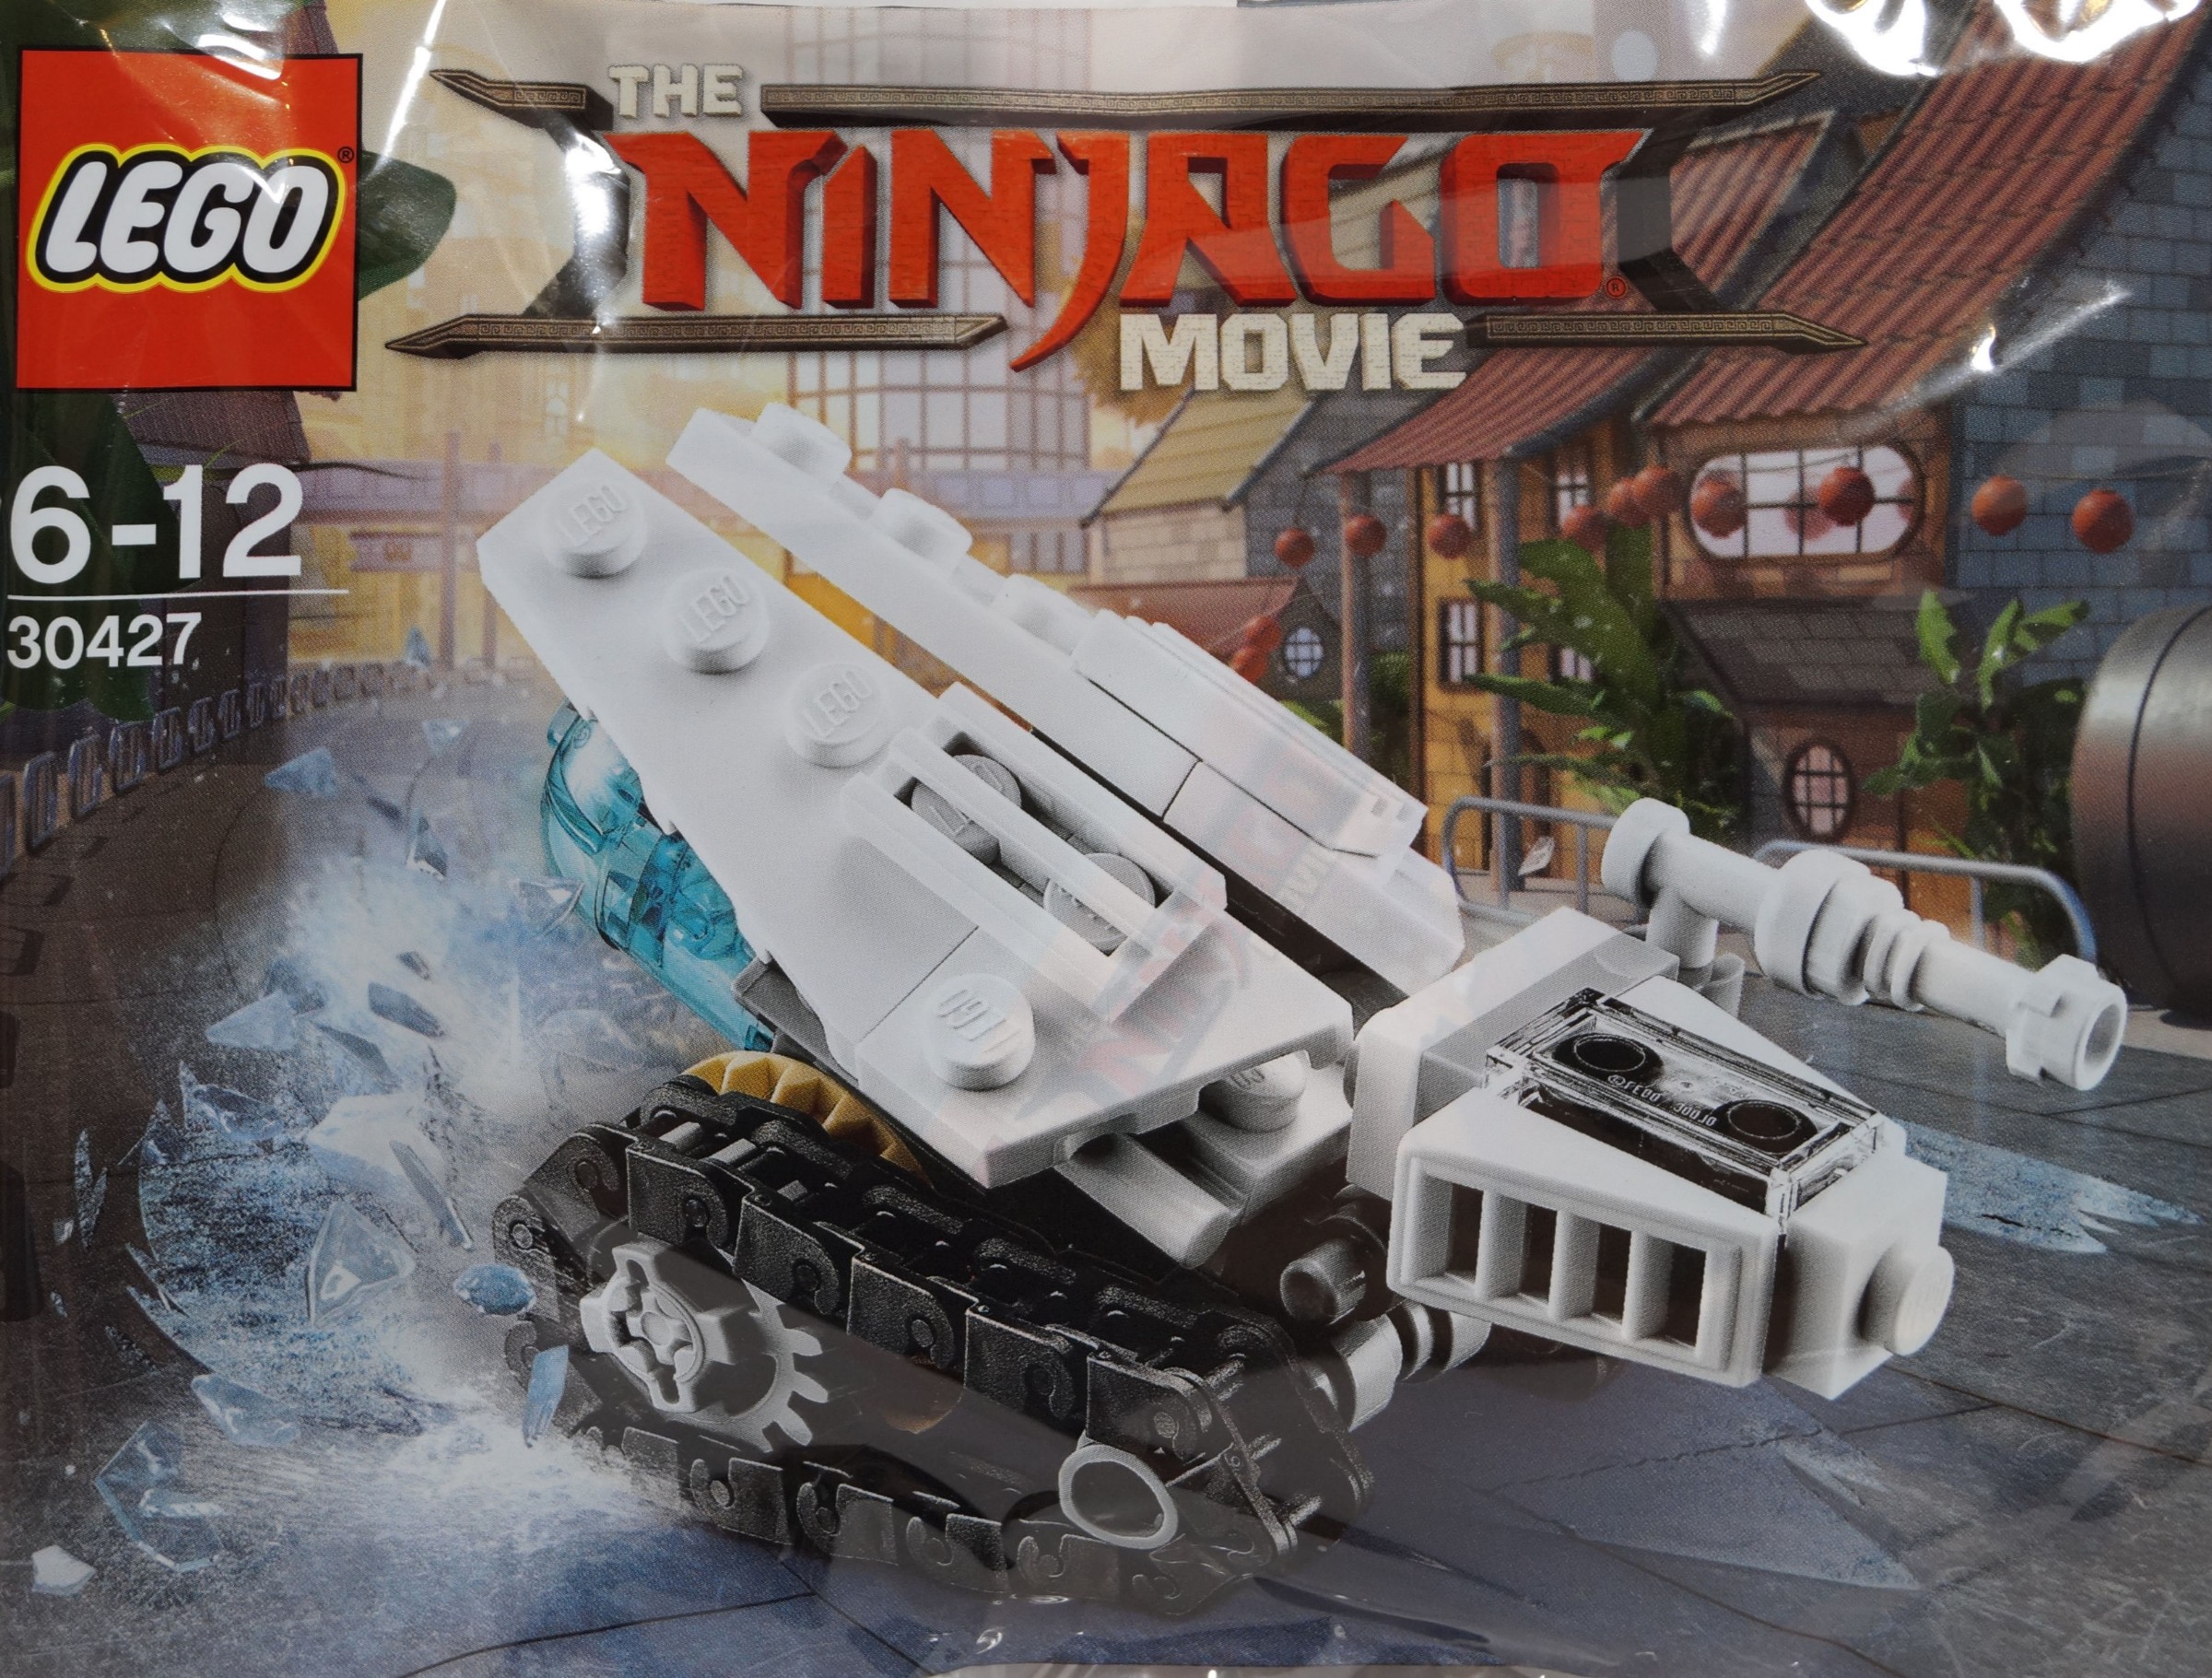 The LEGO Ninjago Movie | Brickset: LEGO 